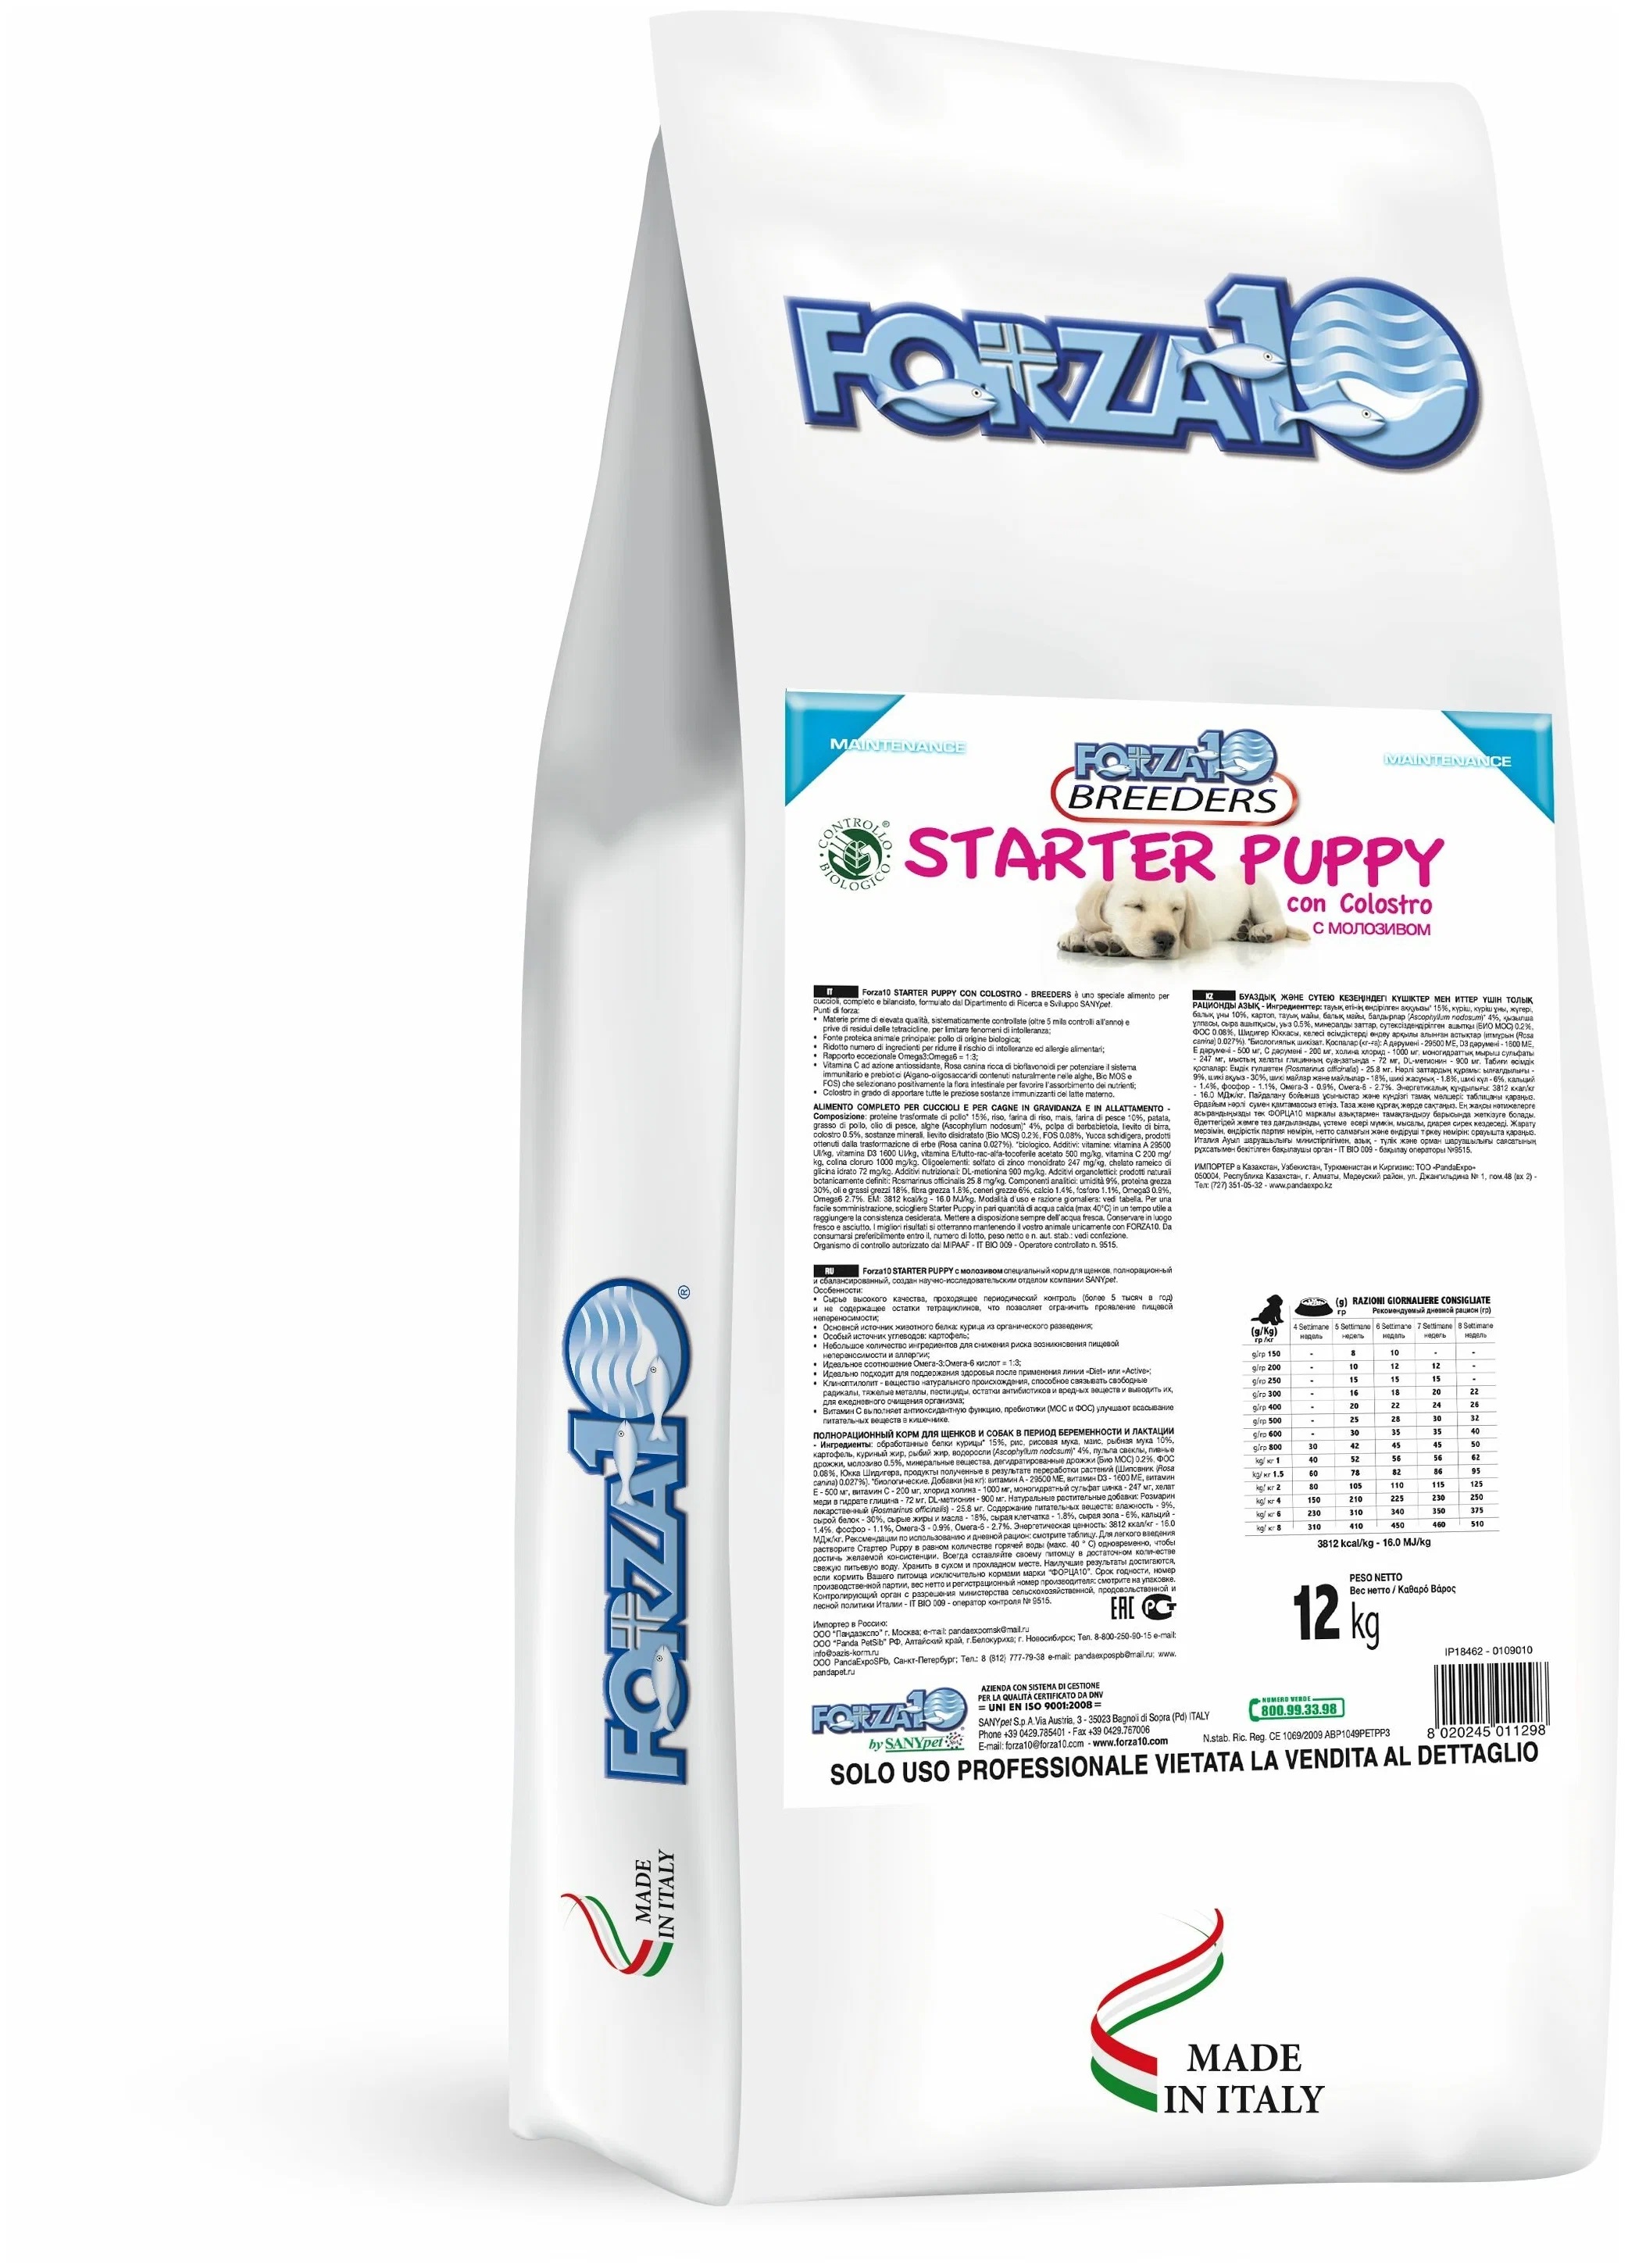 Сухой корм для щенков Forza10 Best Breeders Starter Puppy, рыба, 12кг